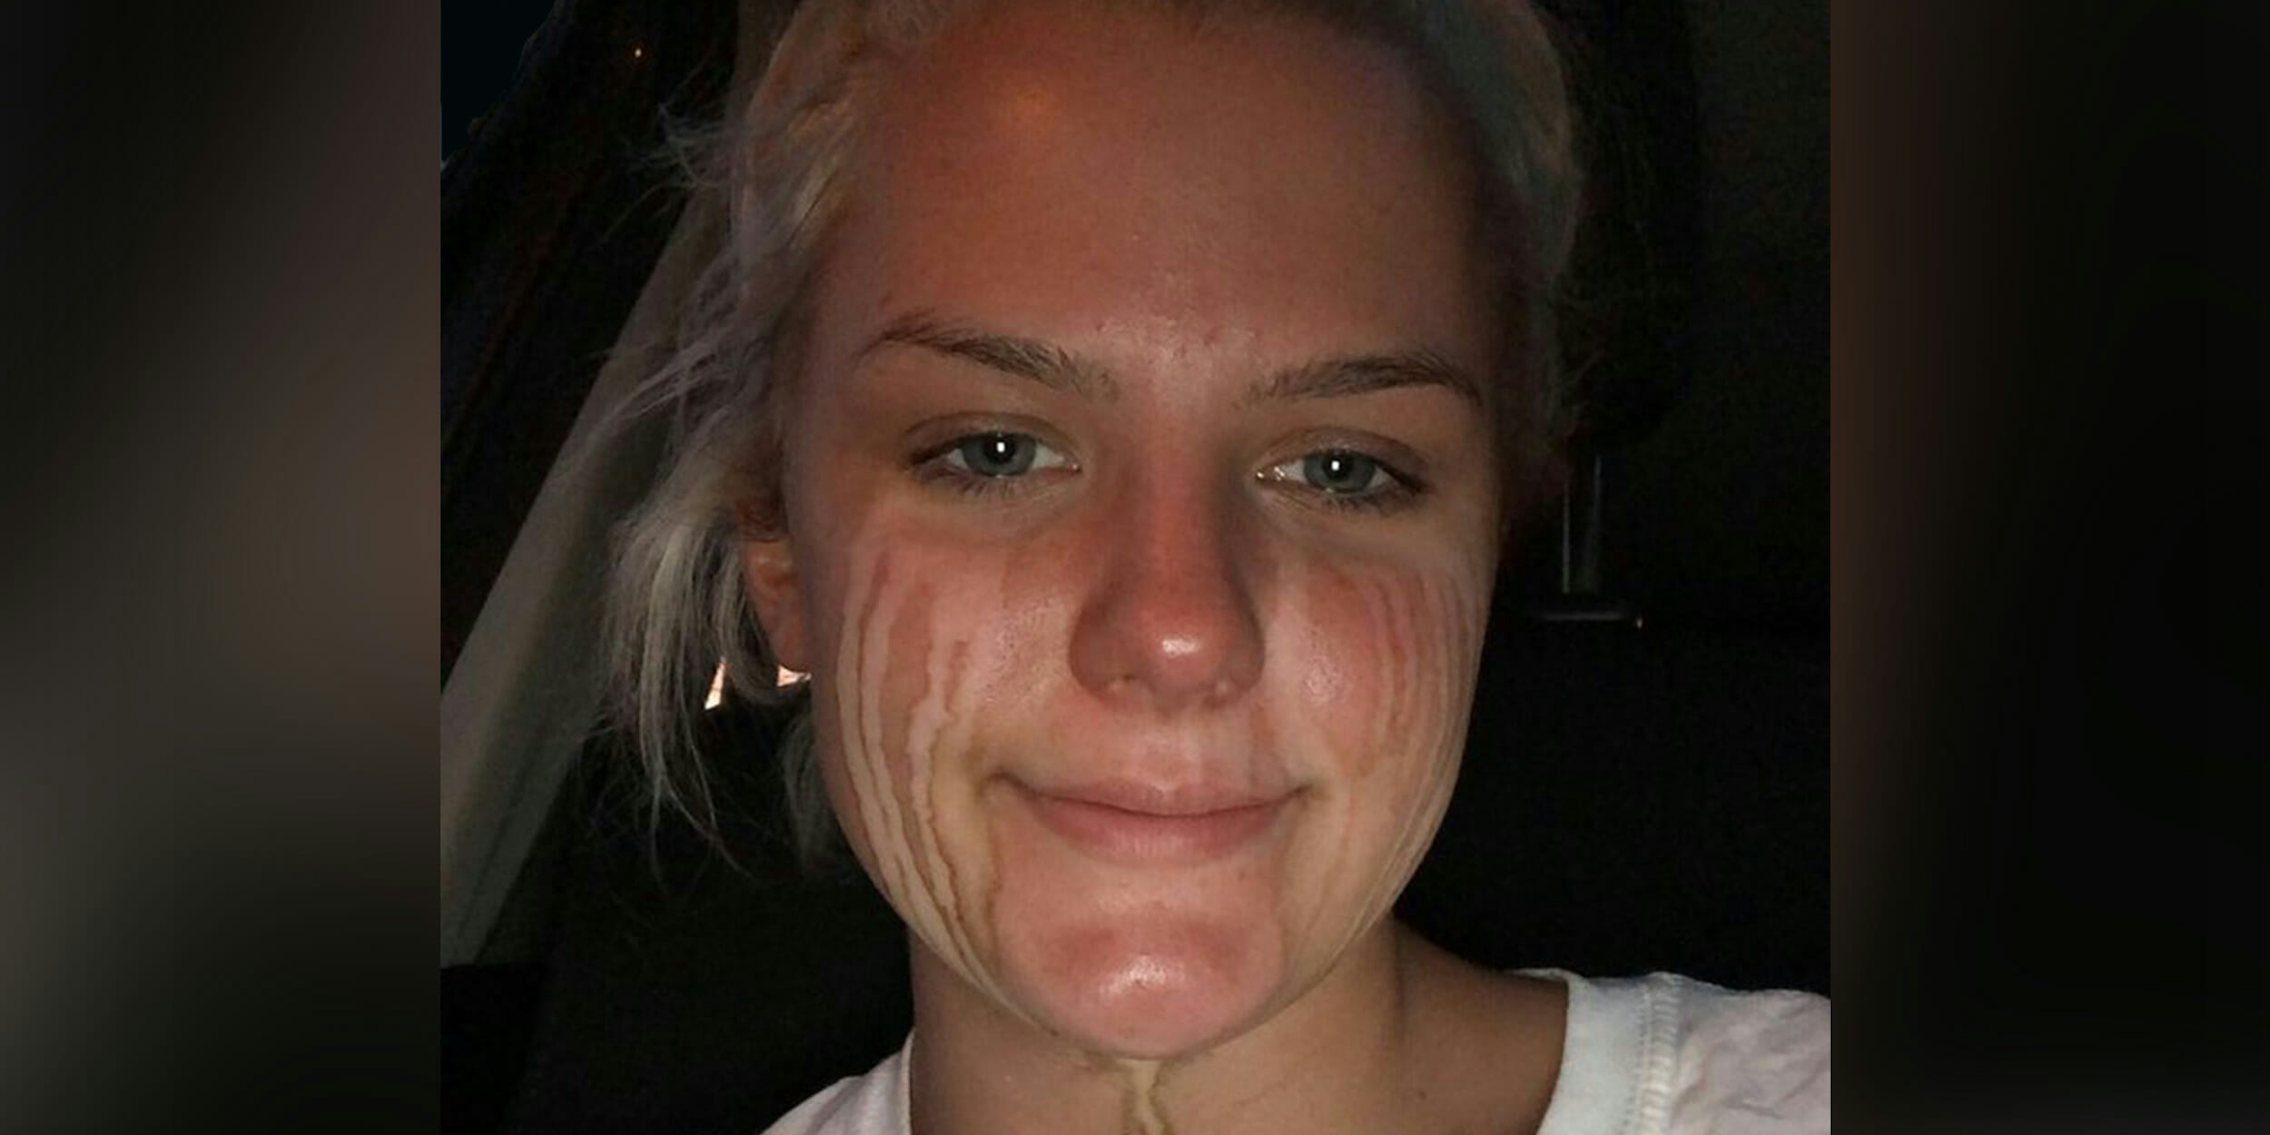 Girl cried during Spray Tan